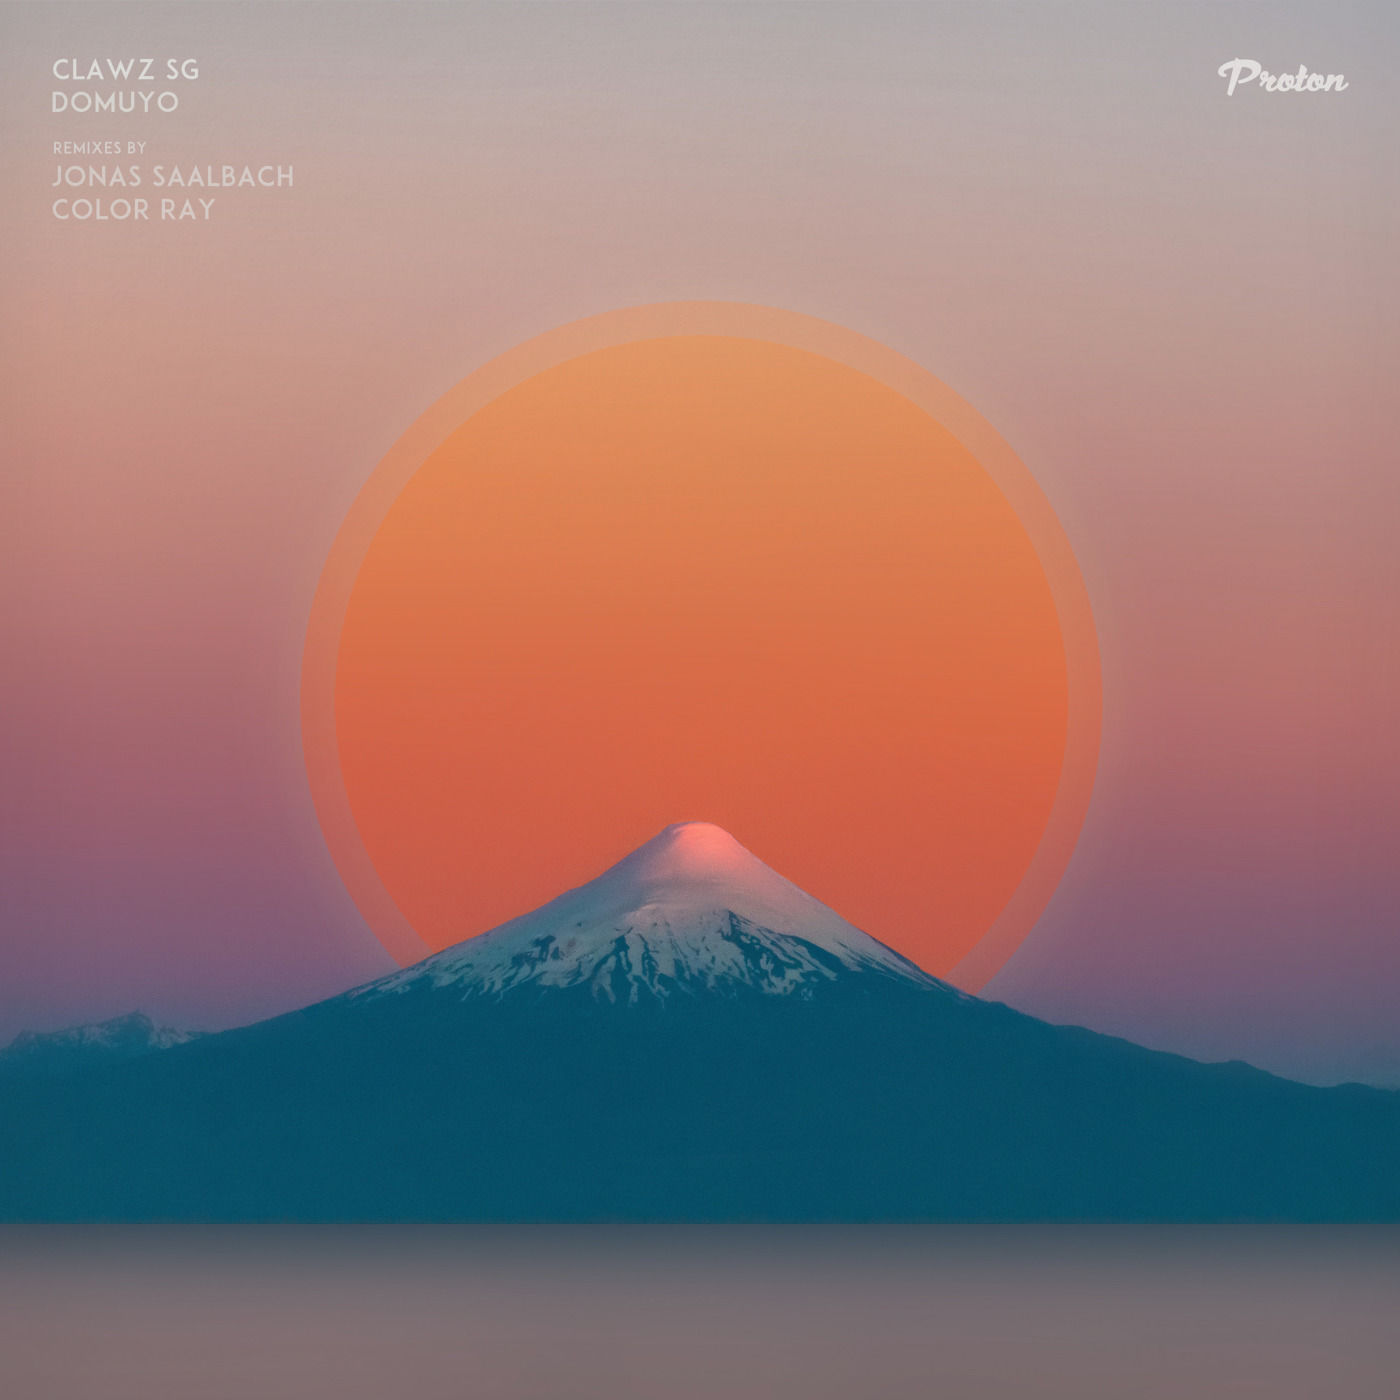 Clawz SG - Domuyo (Color Ray Remix)